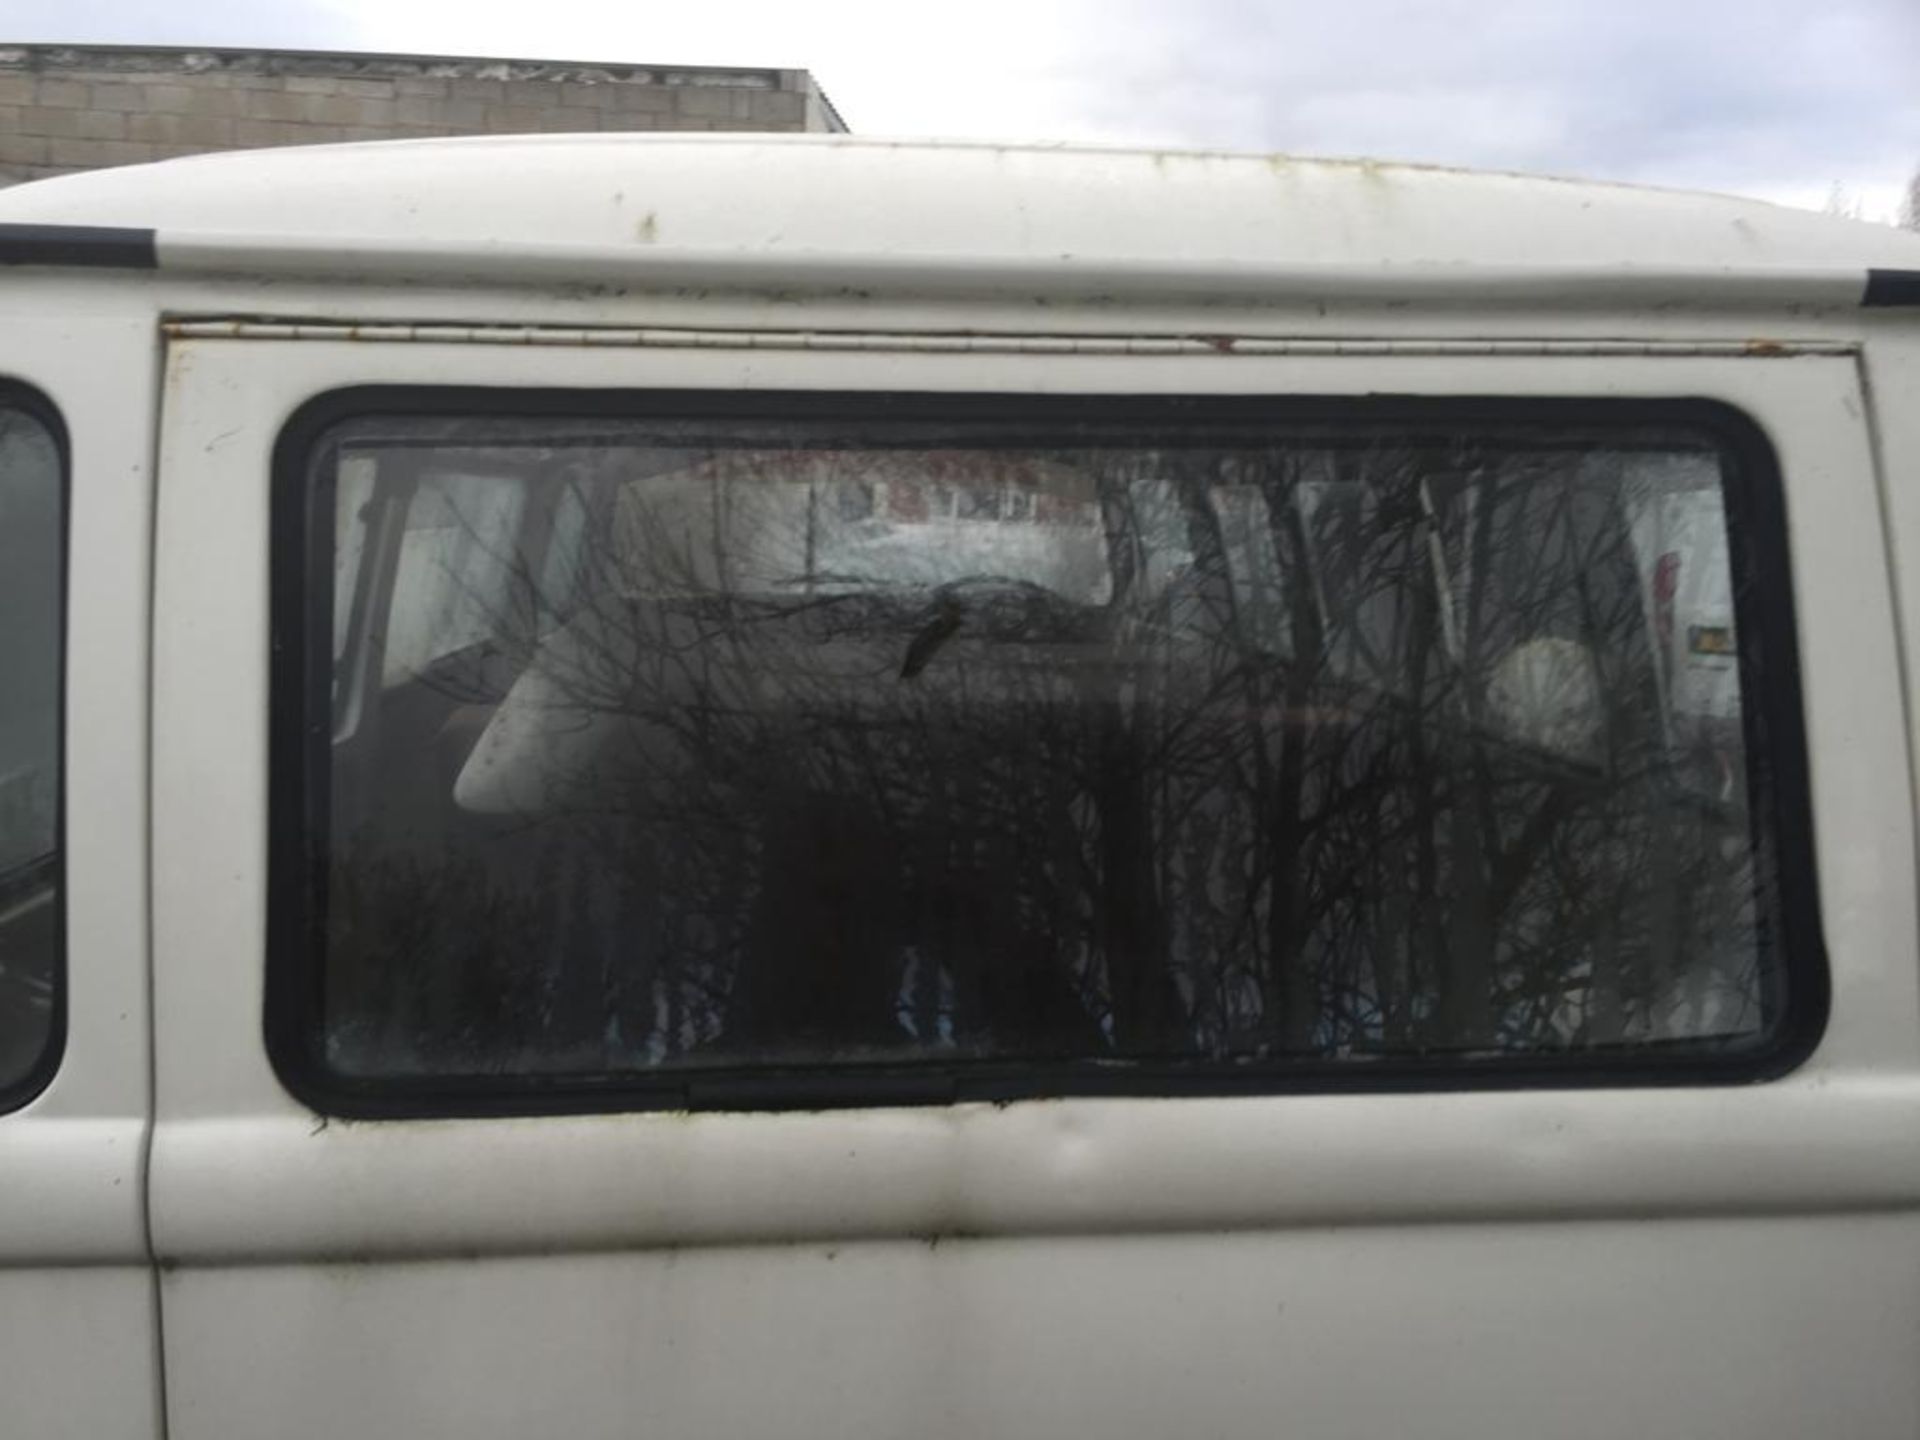 VW 15 window bus - Image 5 of 11